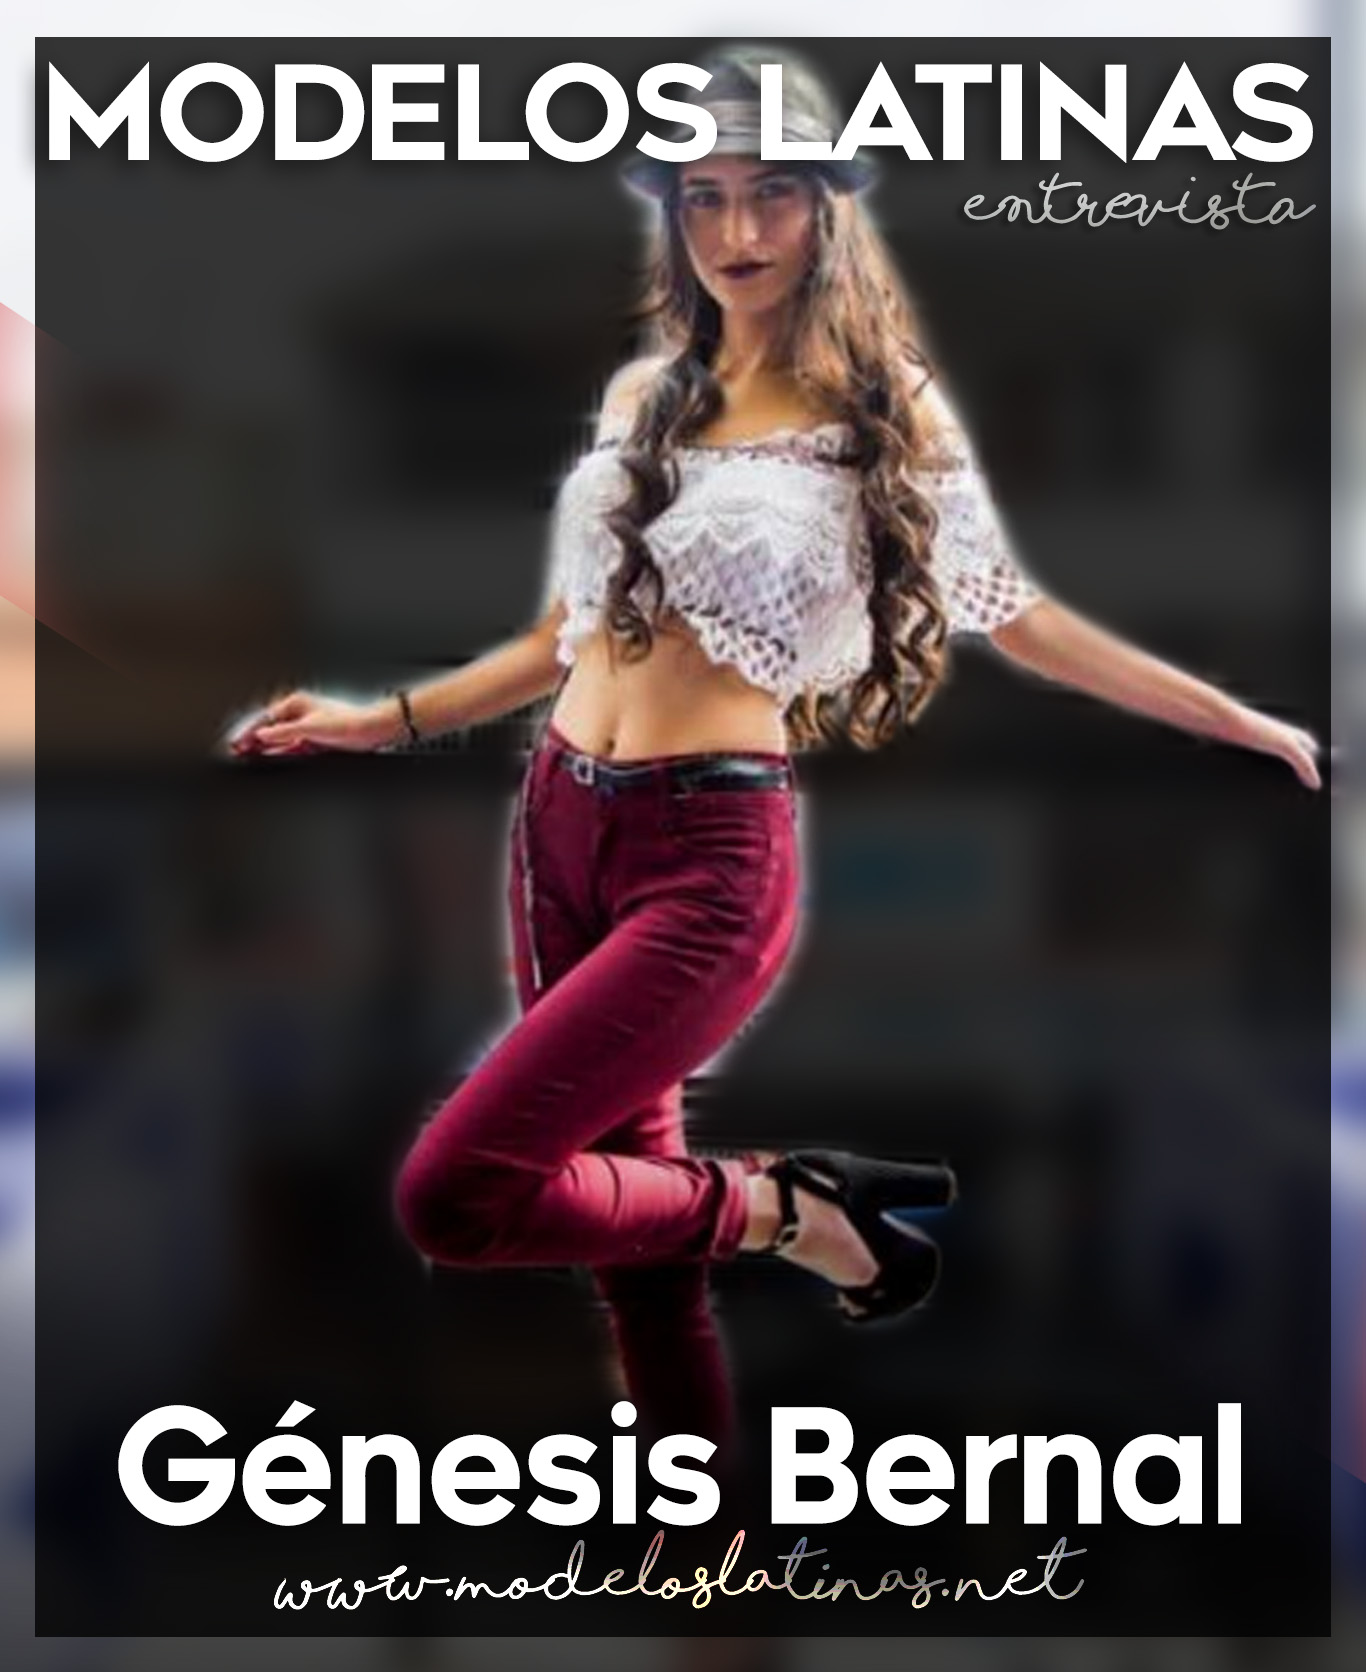 GENESIS BERNAL